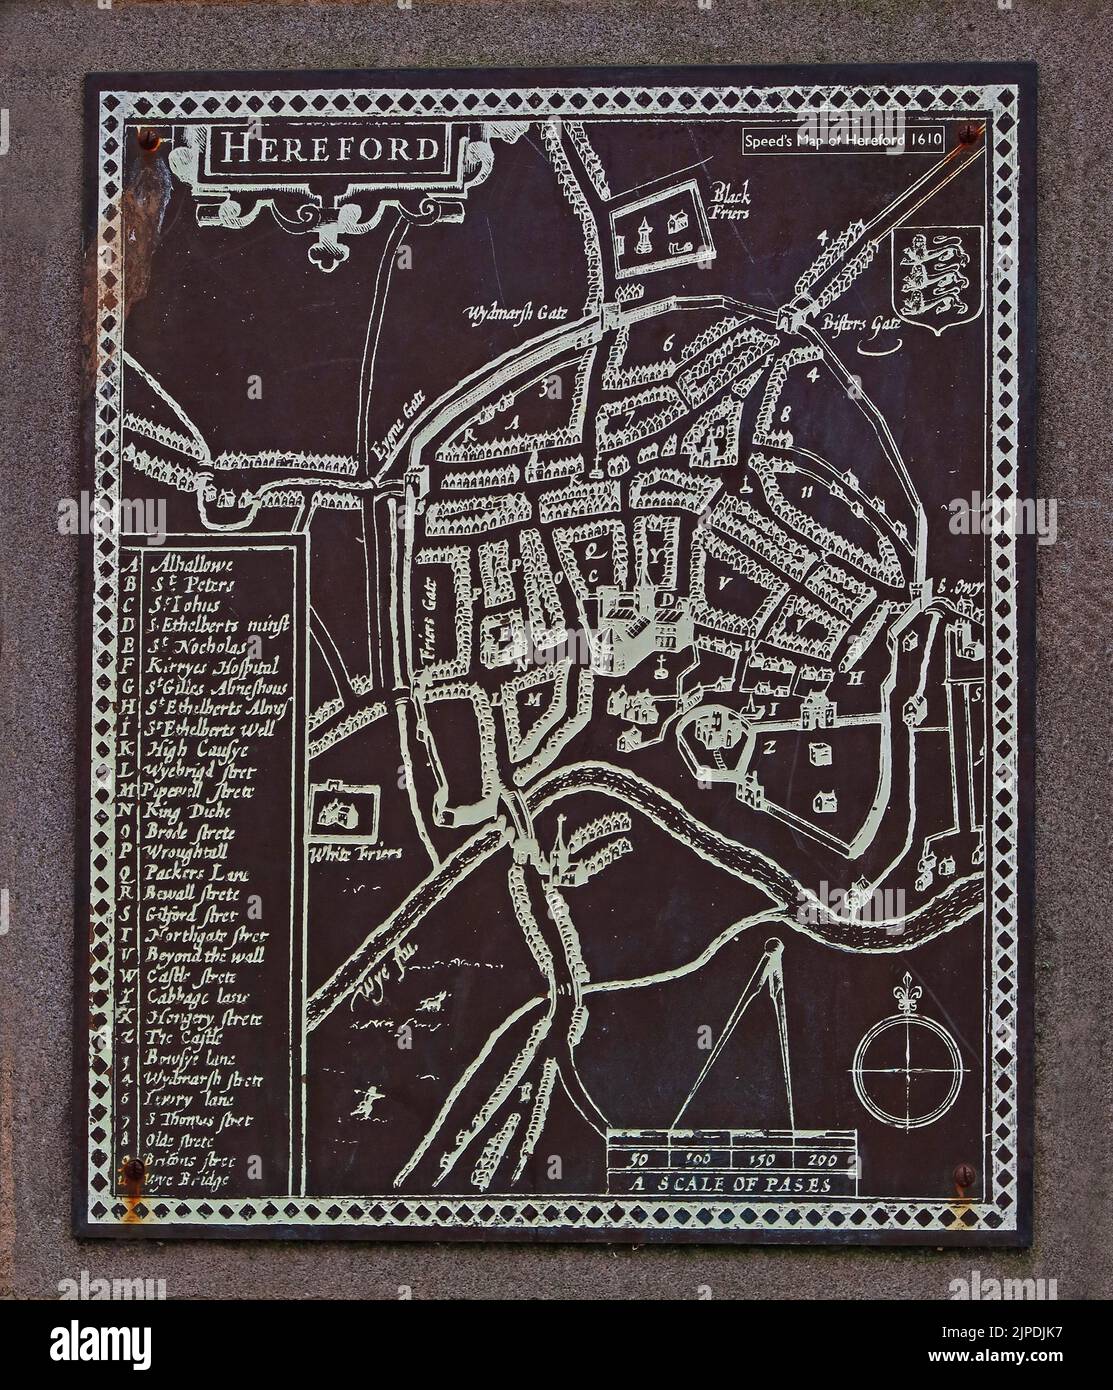 Carte des vitesses de Hereford, de 1610, hors de la cathédrale, 5 College Cloisters, Cathedral Close, Hereford , Herefordshire, Angleterre, Royaume-Uni, HR1 2NG Banque D'Images